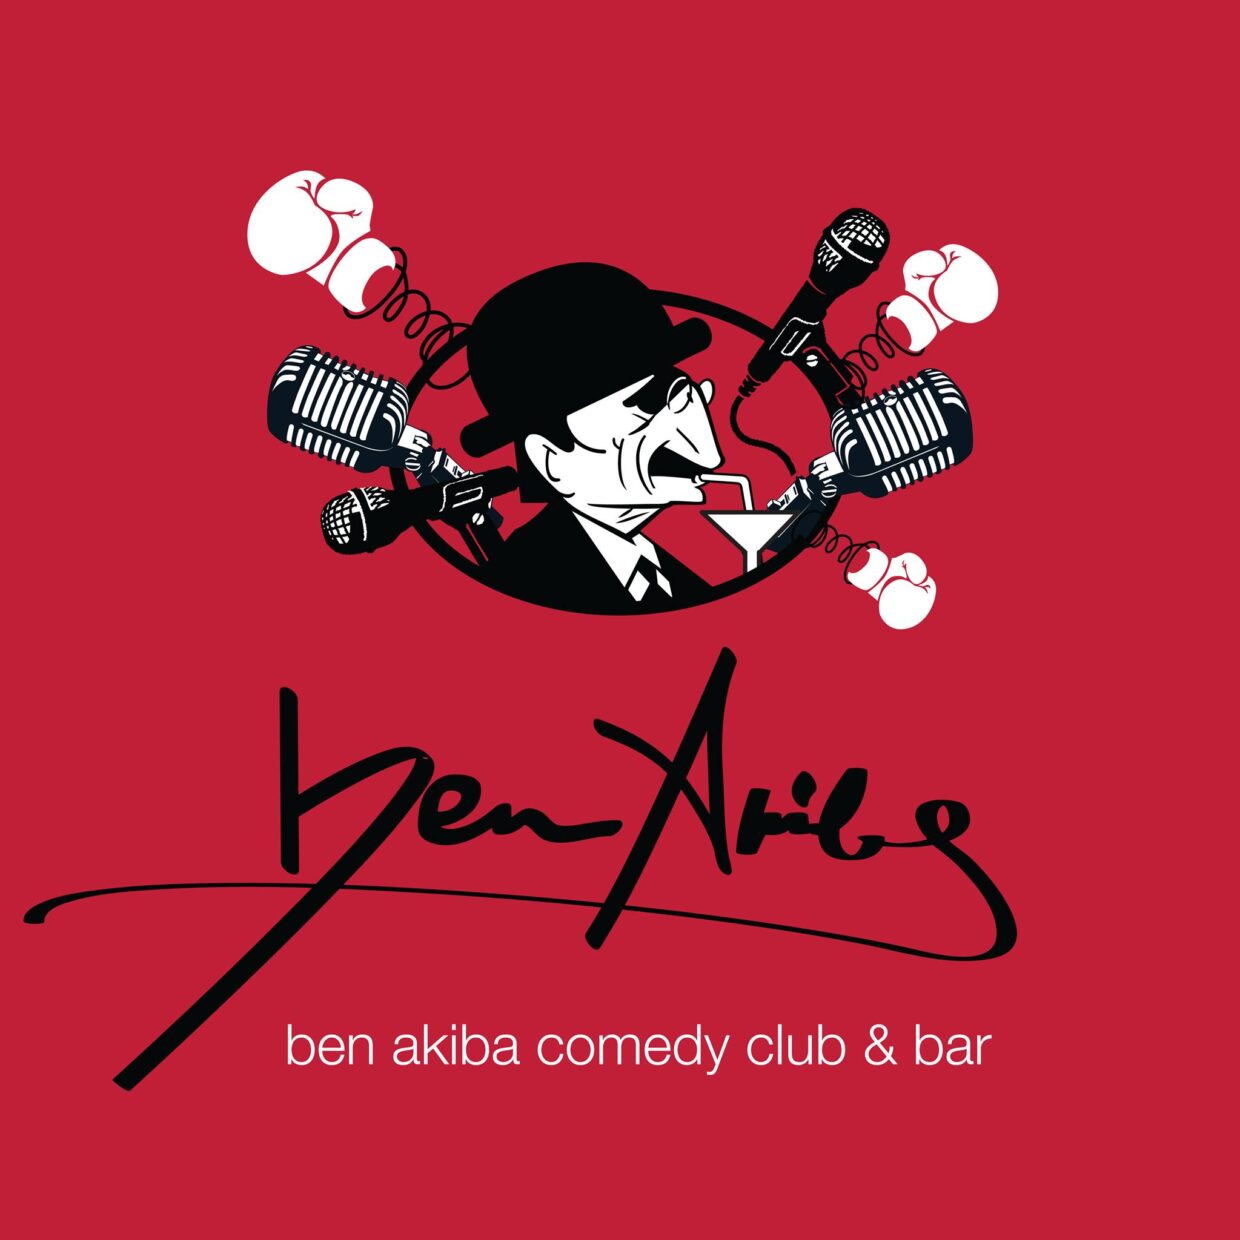 Ben Akiba comedy club & bar